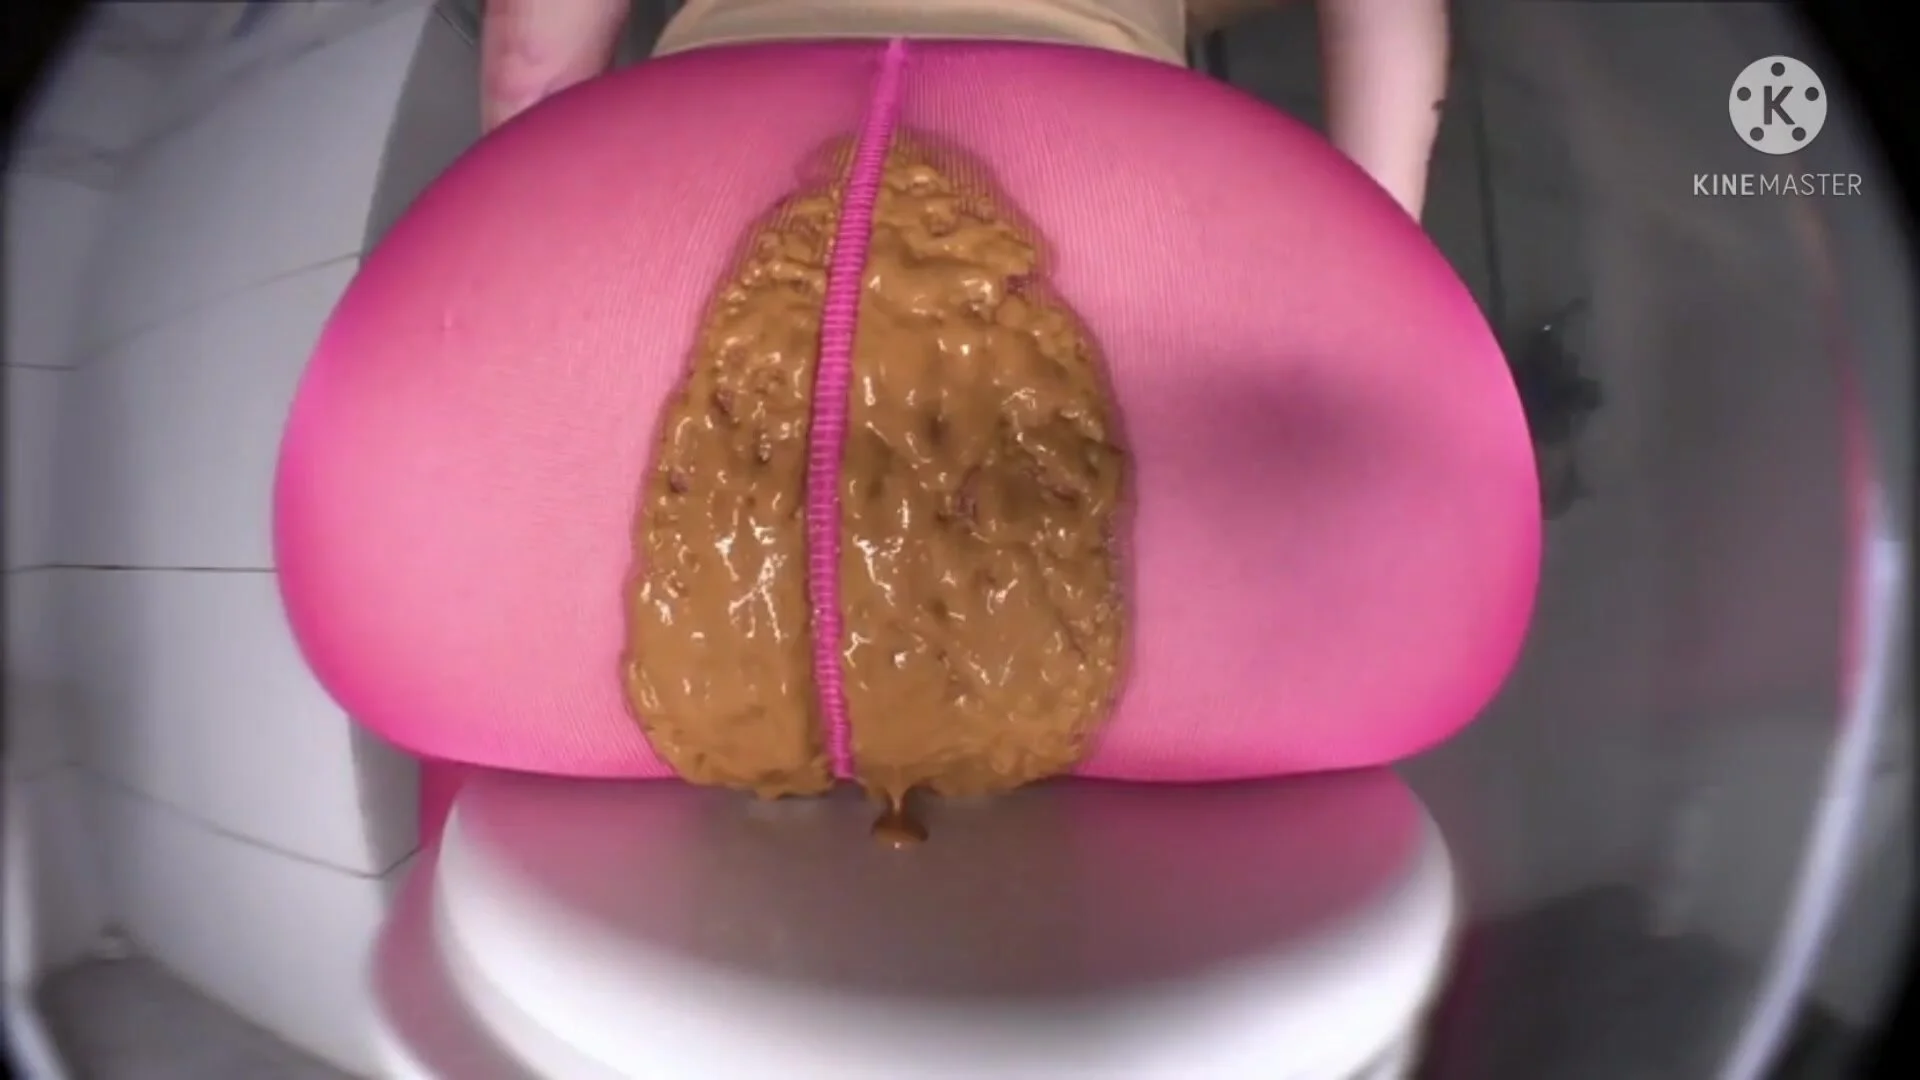 Huge ass girl has diarrhea in her pink leggings